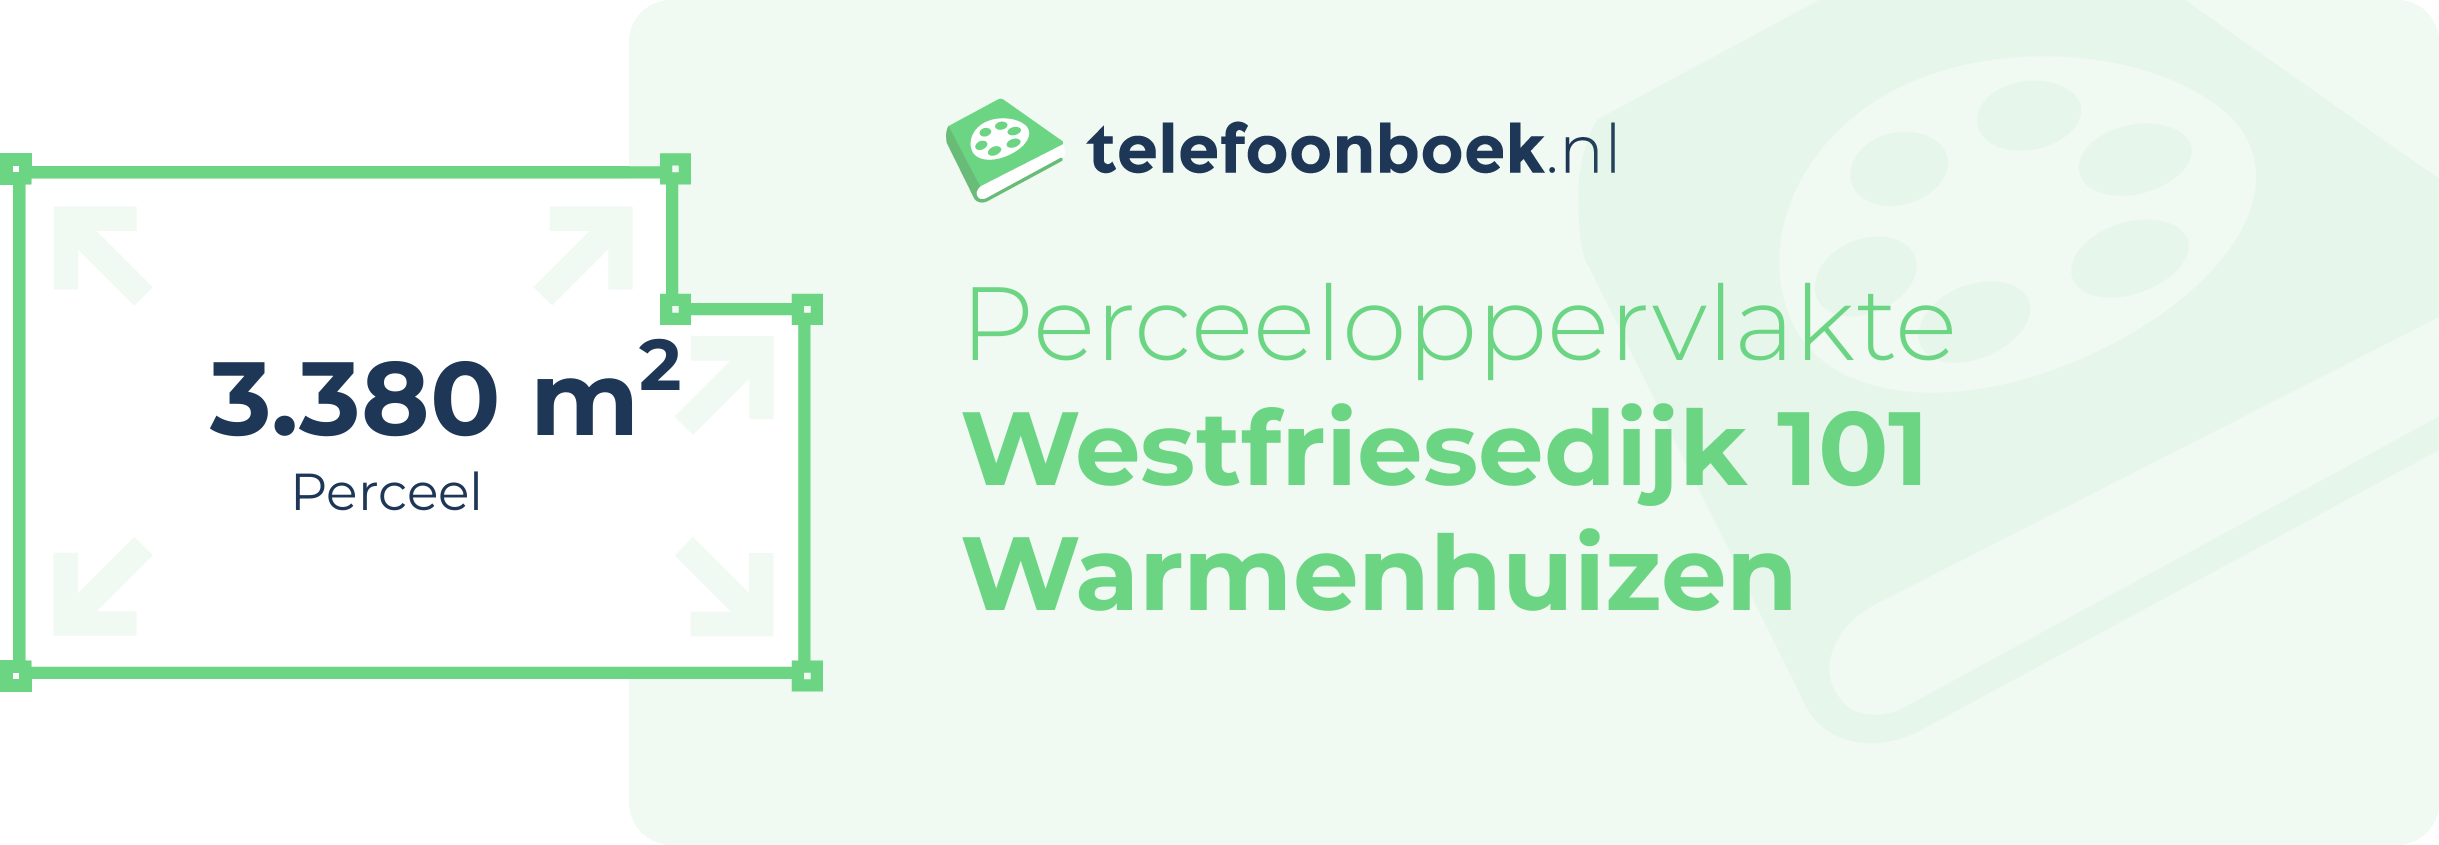 Perceeloppervlakte Westfriesedijk 101 Warmenhuizen